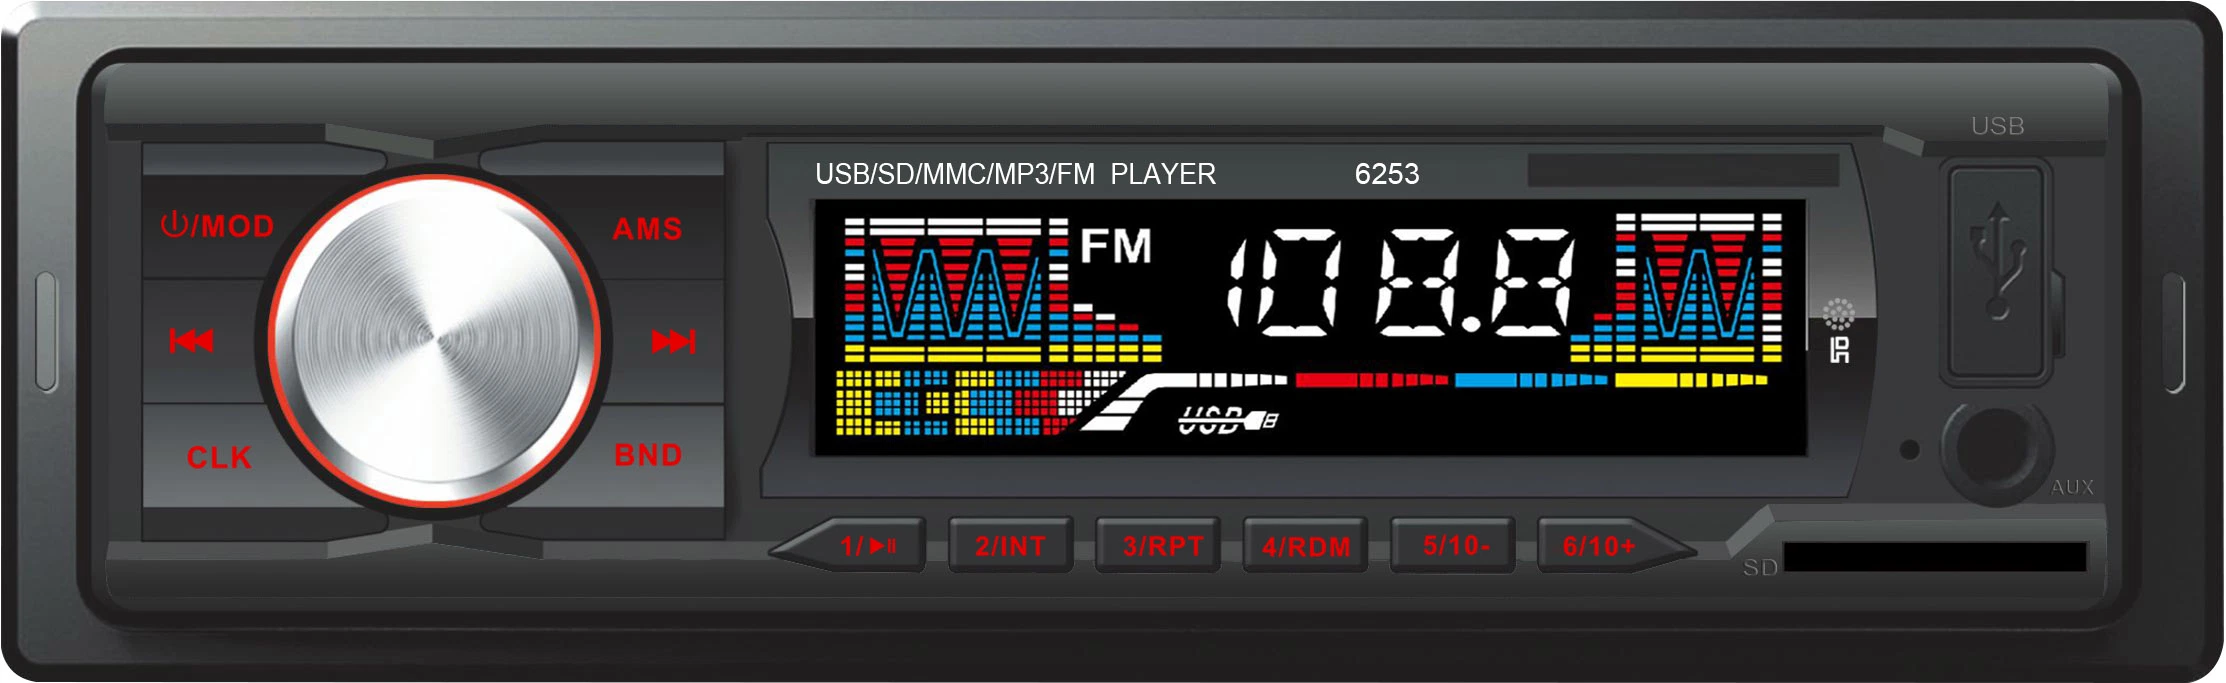 Double USB Car Consumer Electronics MP3 Audio Head Unit